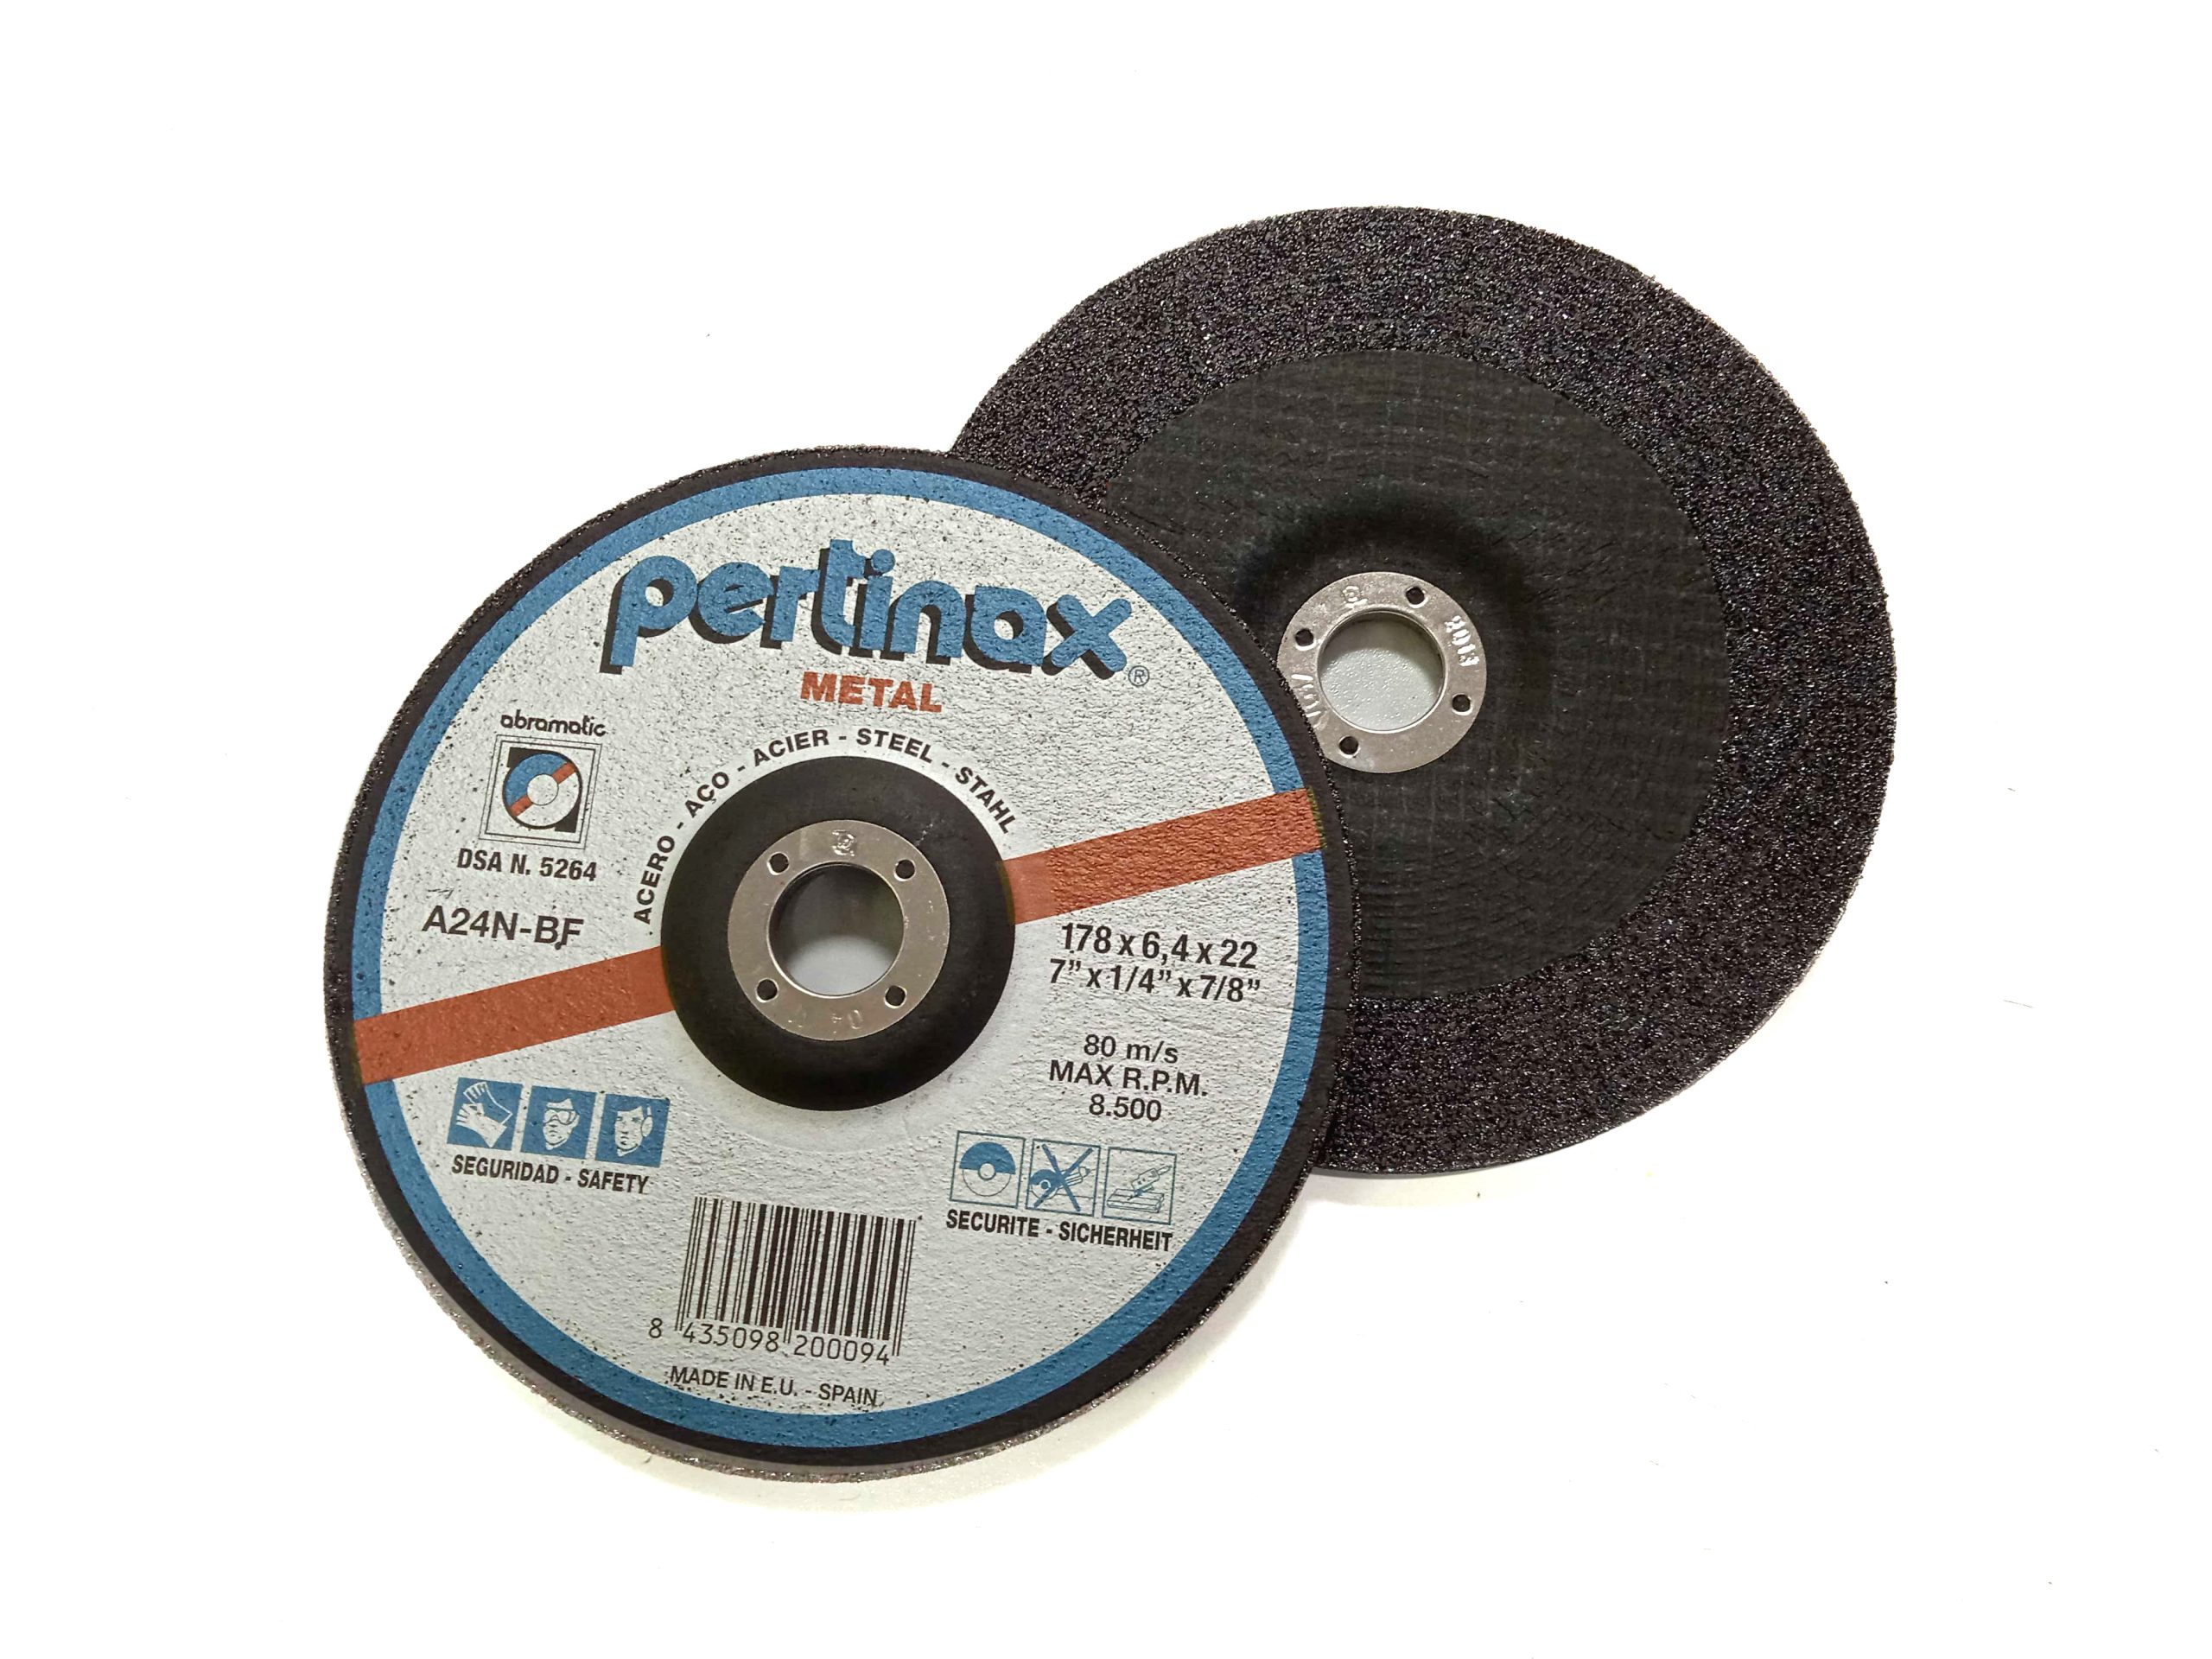 pertinax disco desbarbar metal scaled -